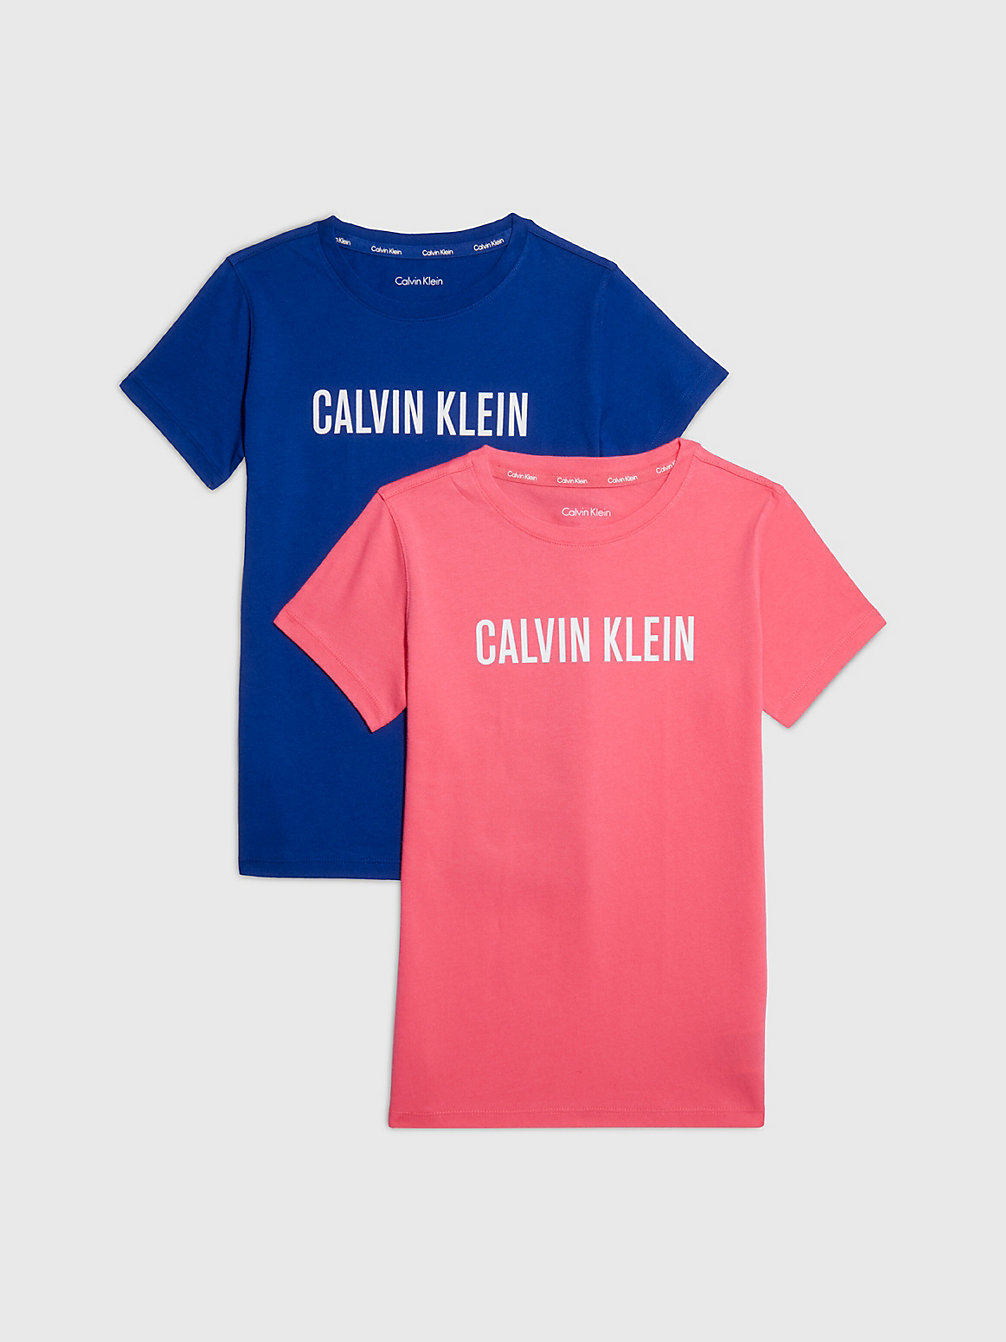 PINKFLASH/BOLDBLUE 2-Pack T-Shirts - Intense Power undefined girls Calvin Klein